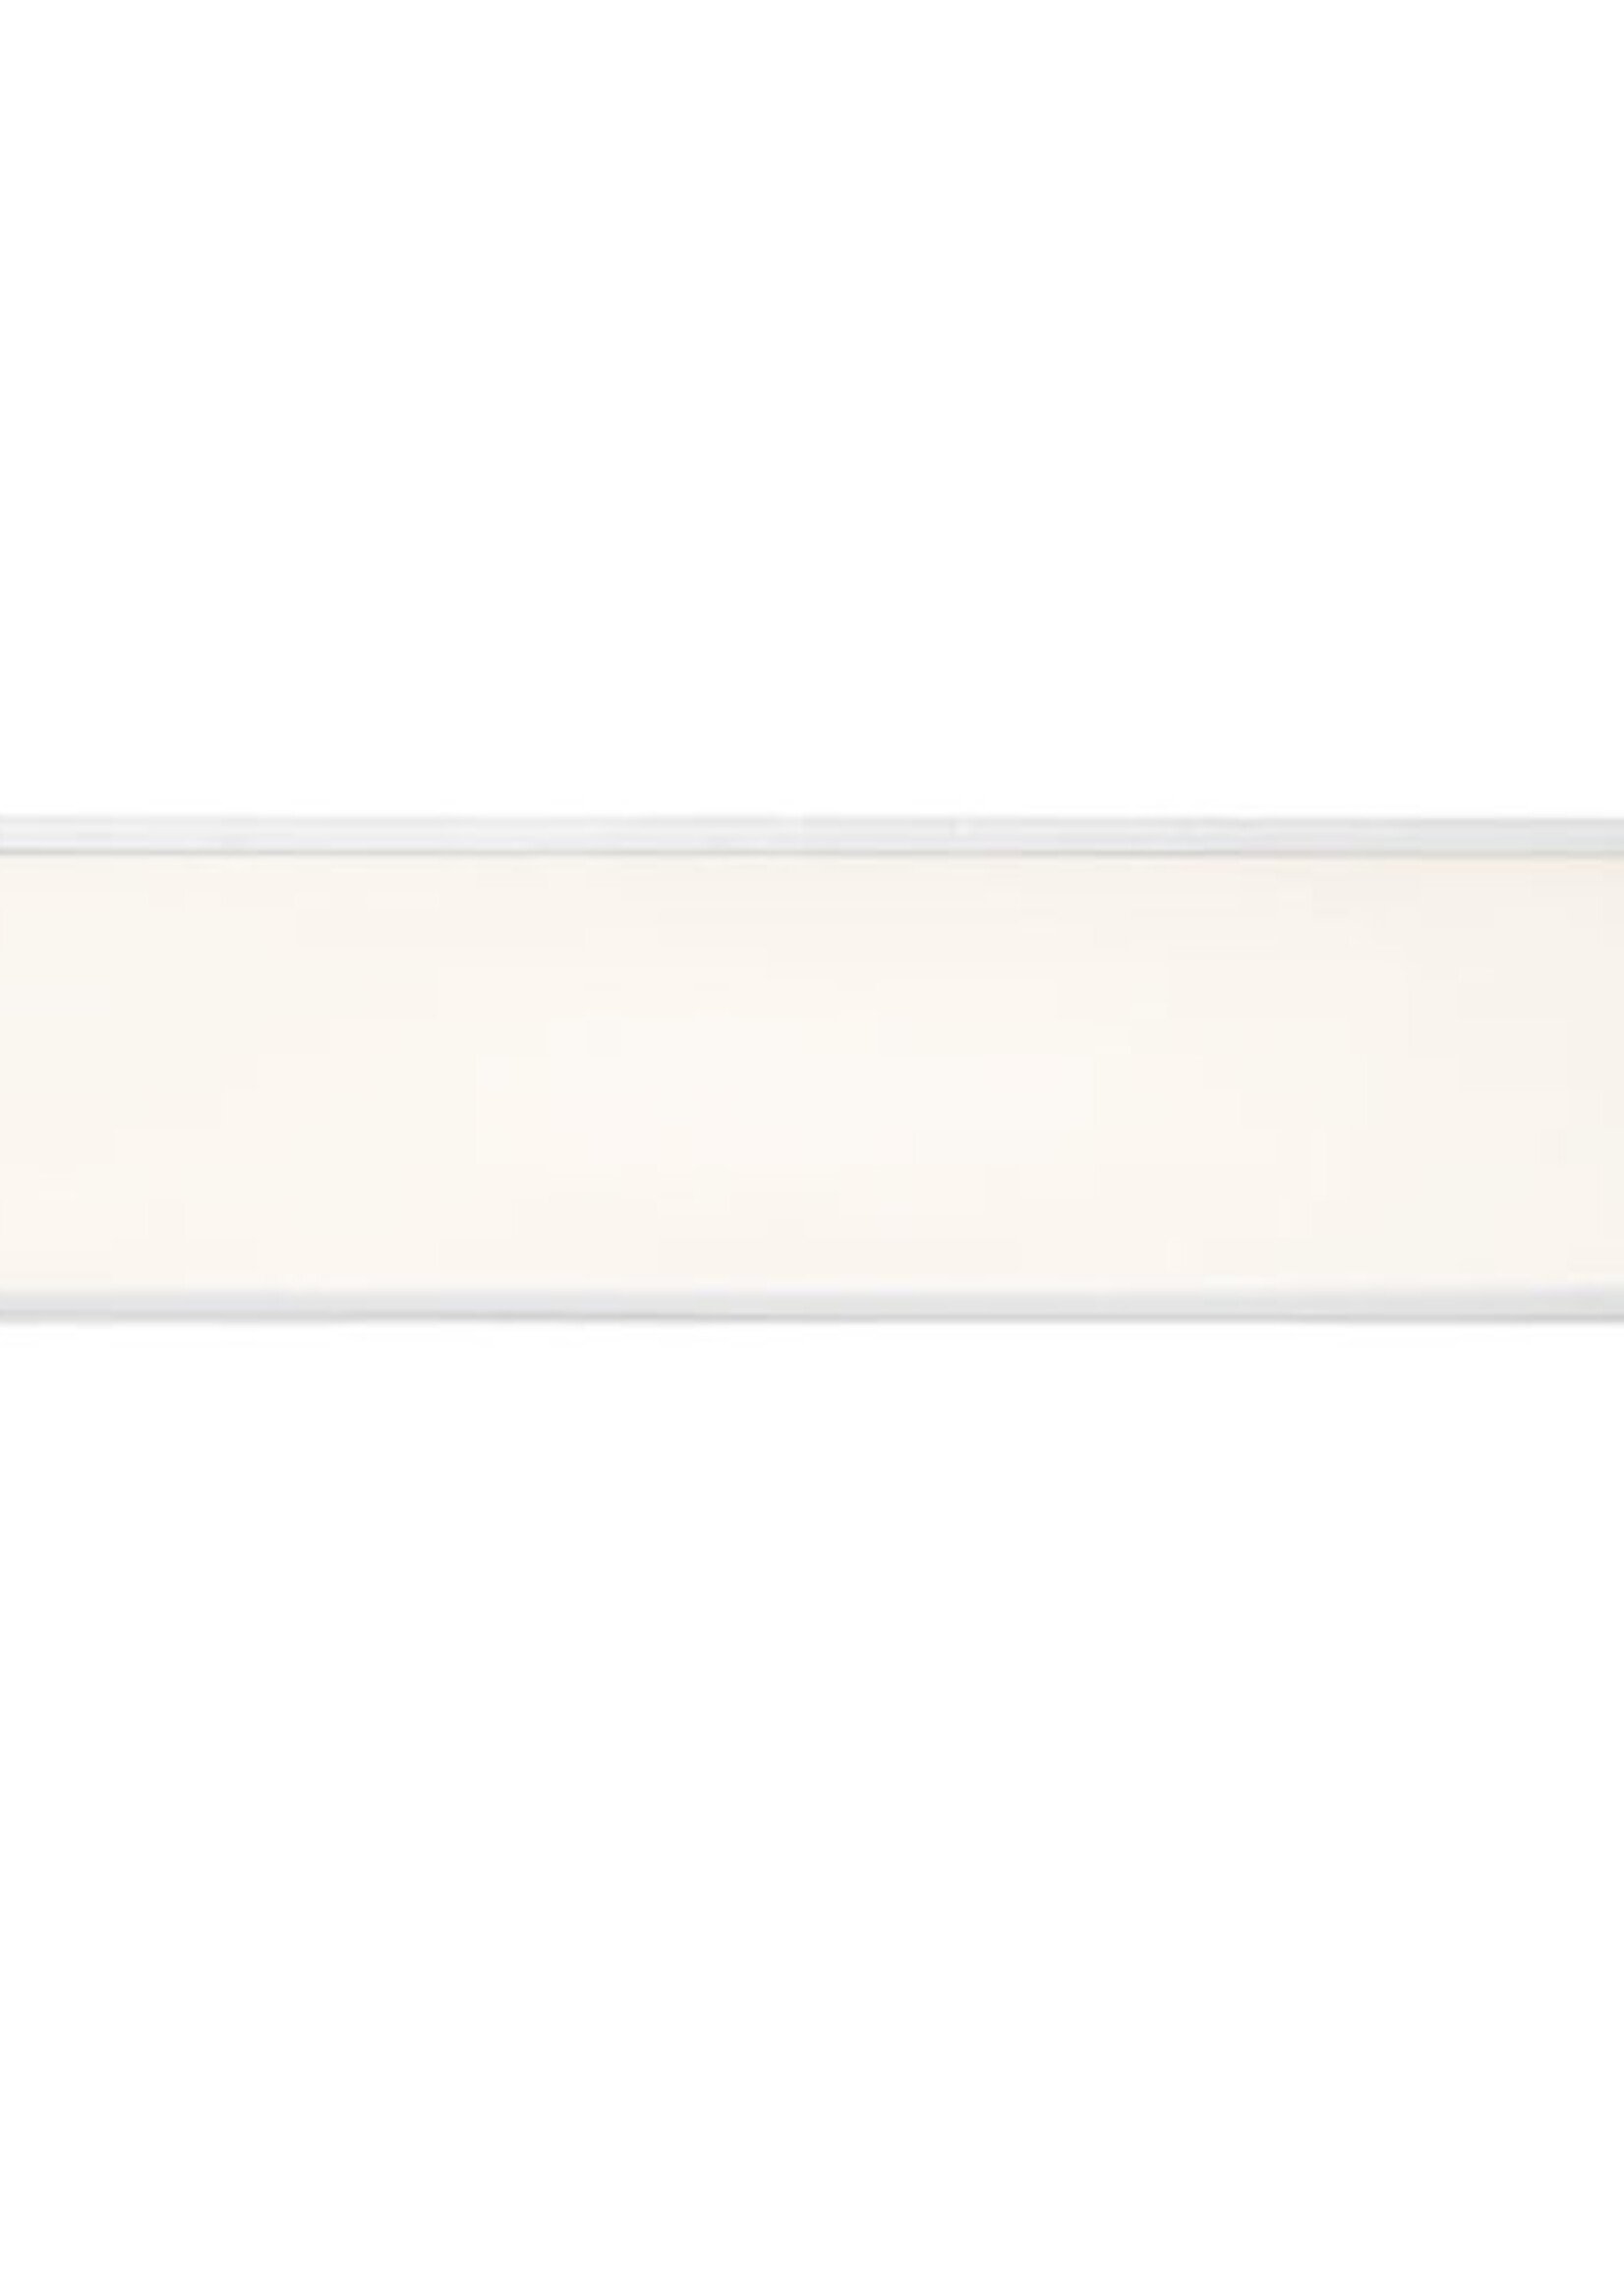 LEDWINKEL-Online LED Panel 30x120cm UGR<19 36W 120lm/W High lumen Edge-lit